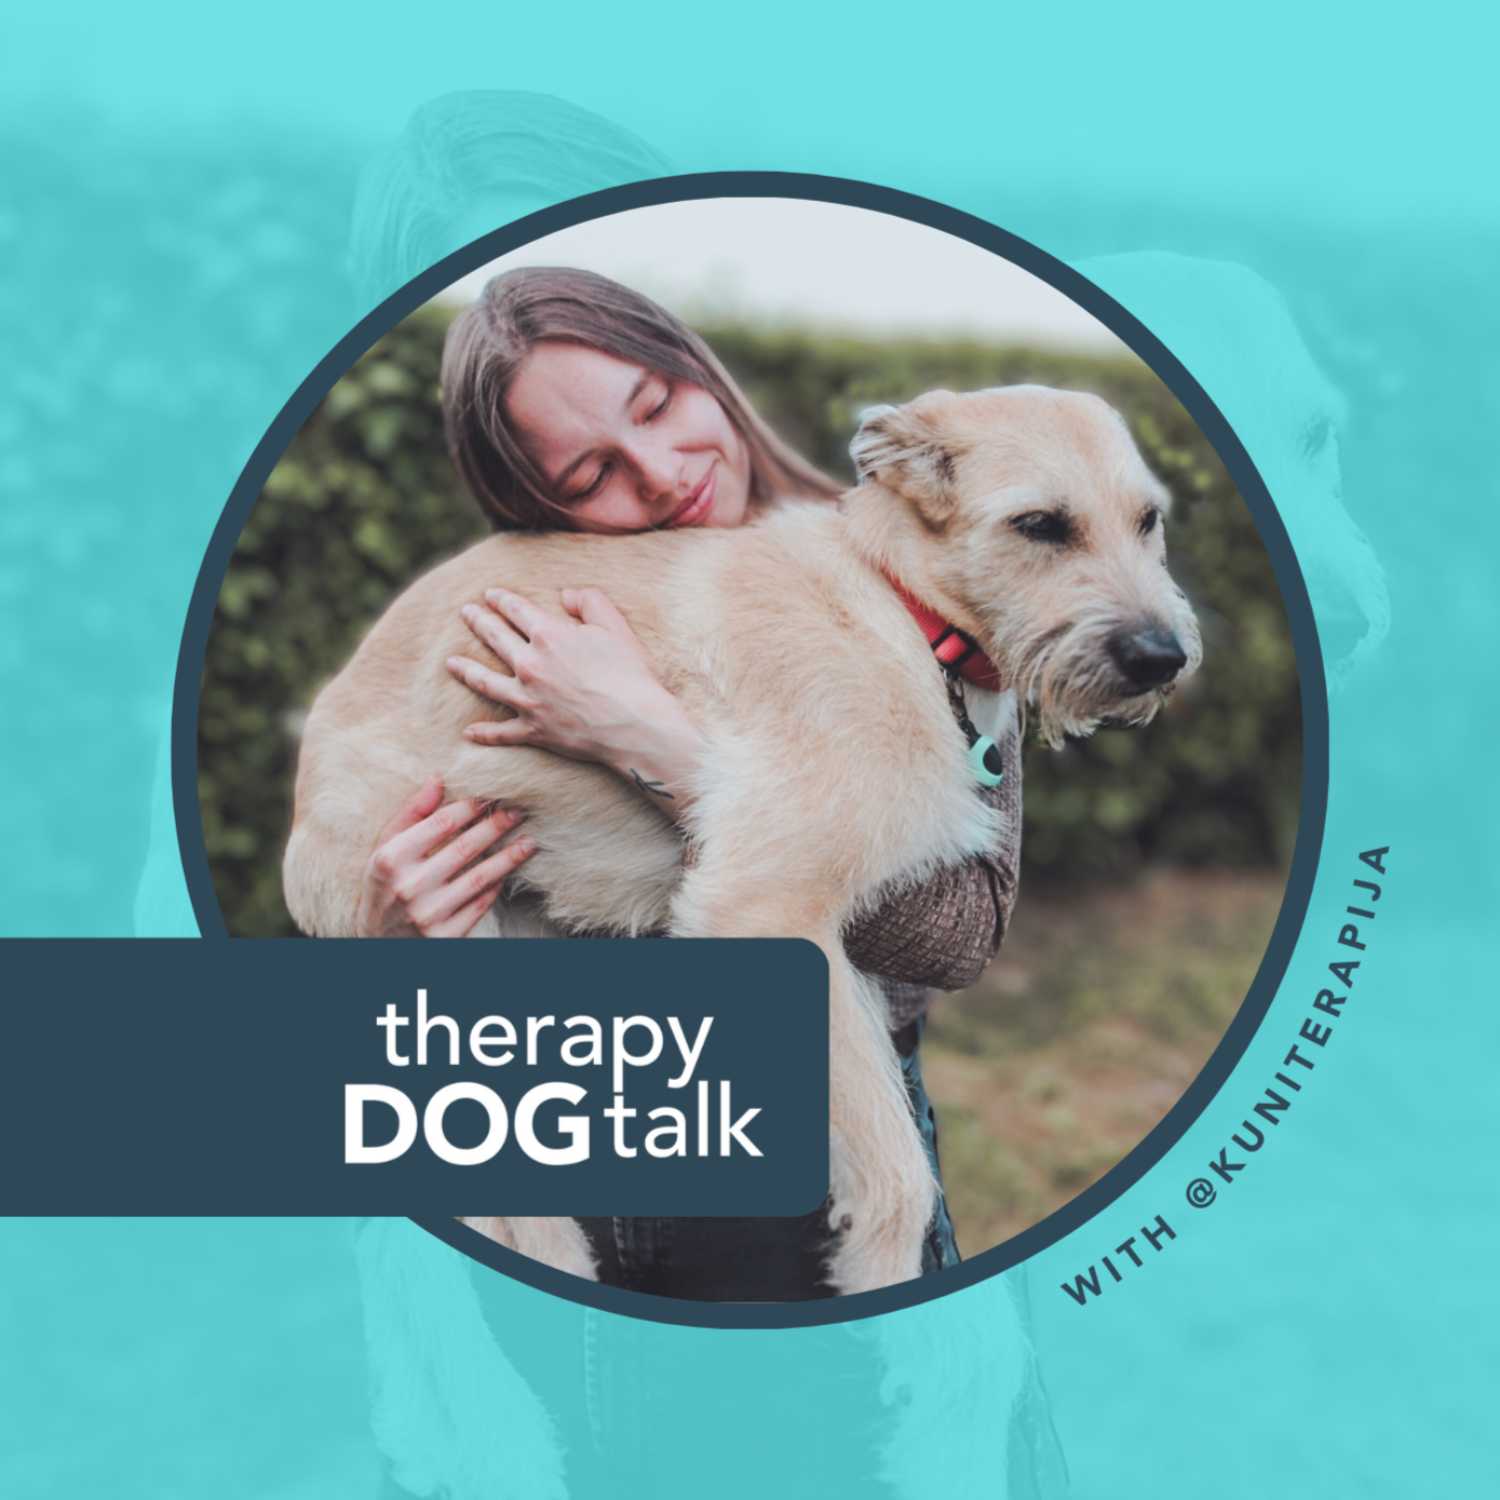 Ugnė + Kuna: A volunteer Therapy Dog team in Lithuania.